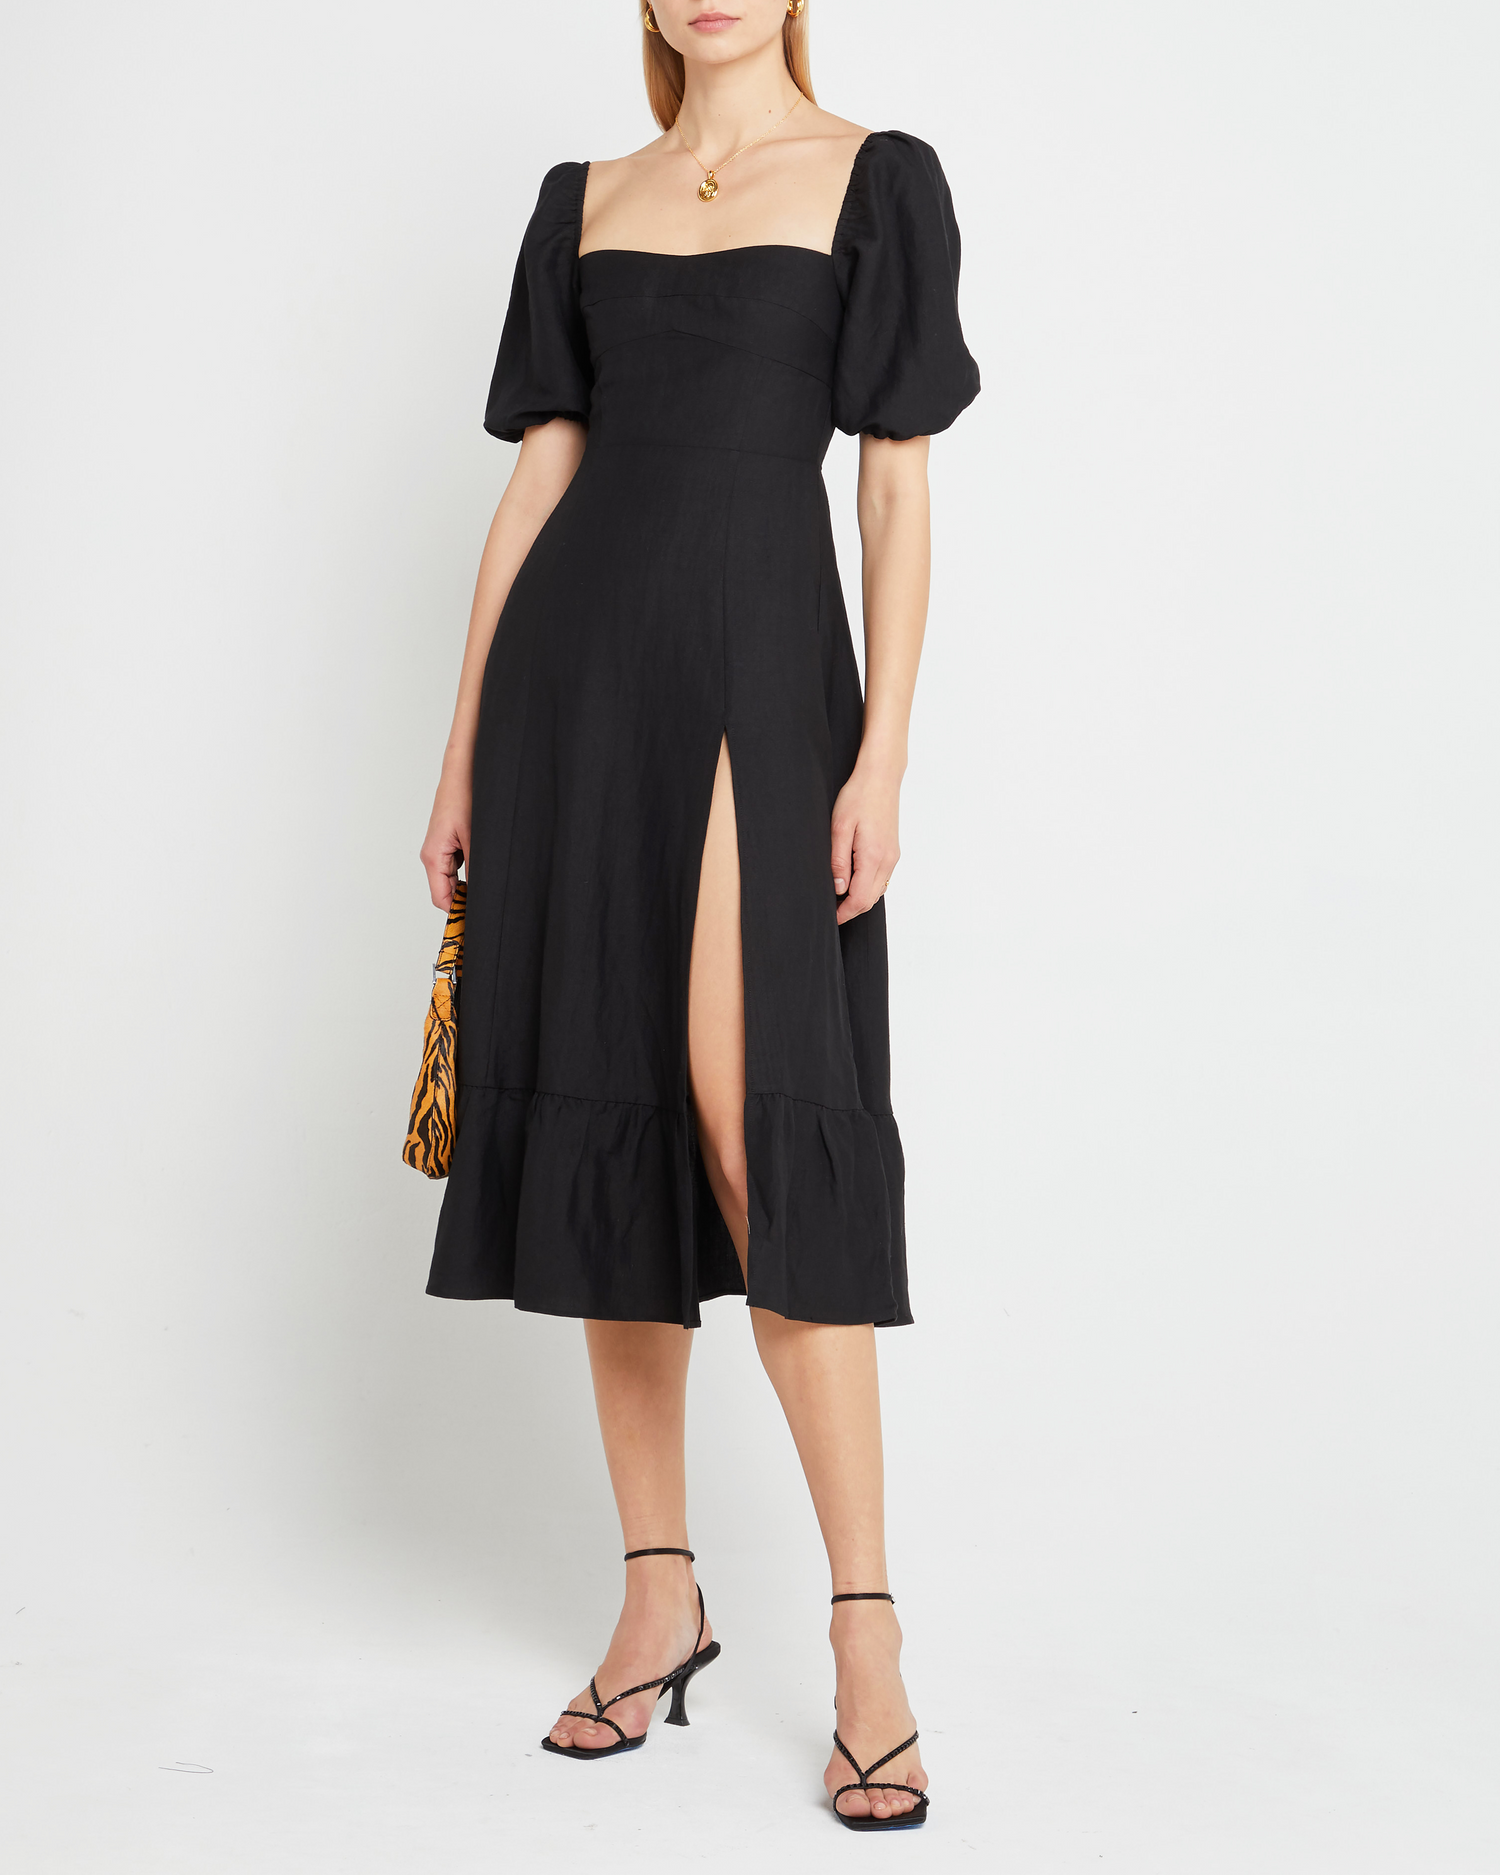 First image of Violetta Midi Dress, a black midi dress, sweetheart neckline, short sleeves, puff sleeves, side slit